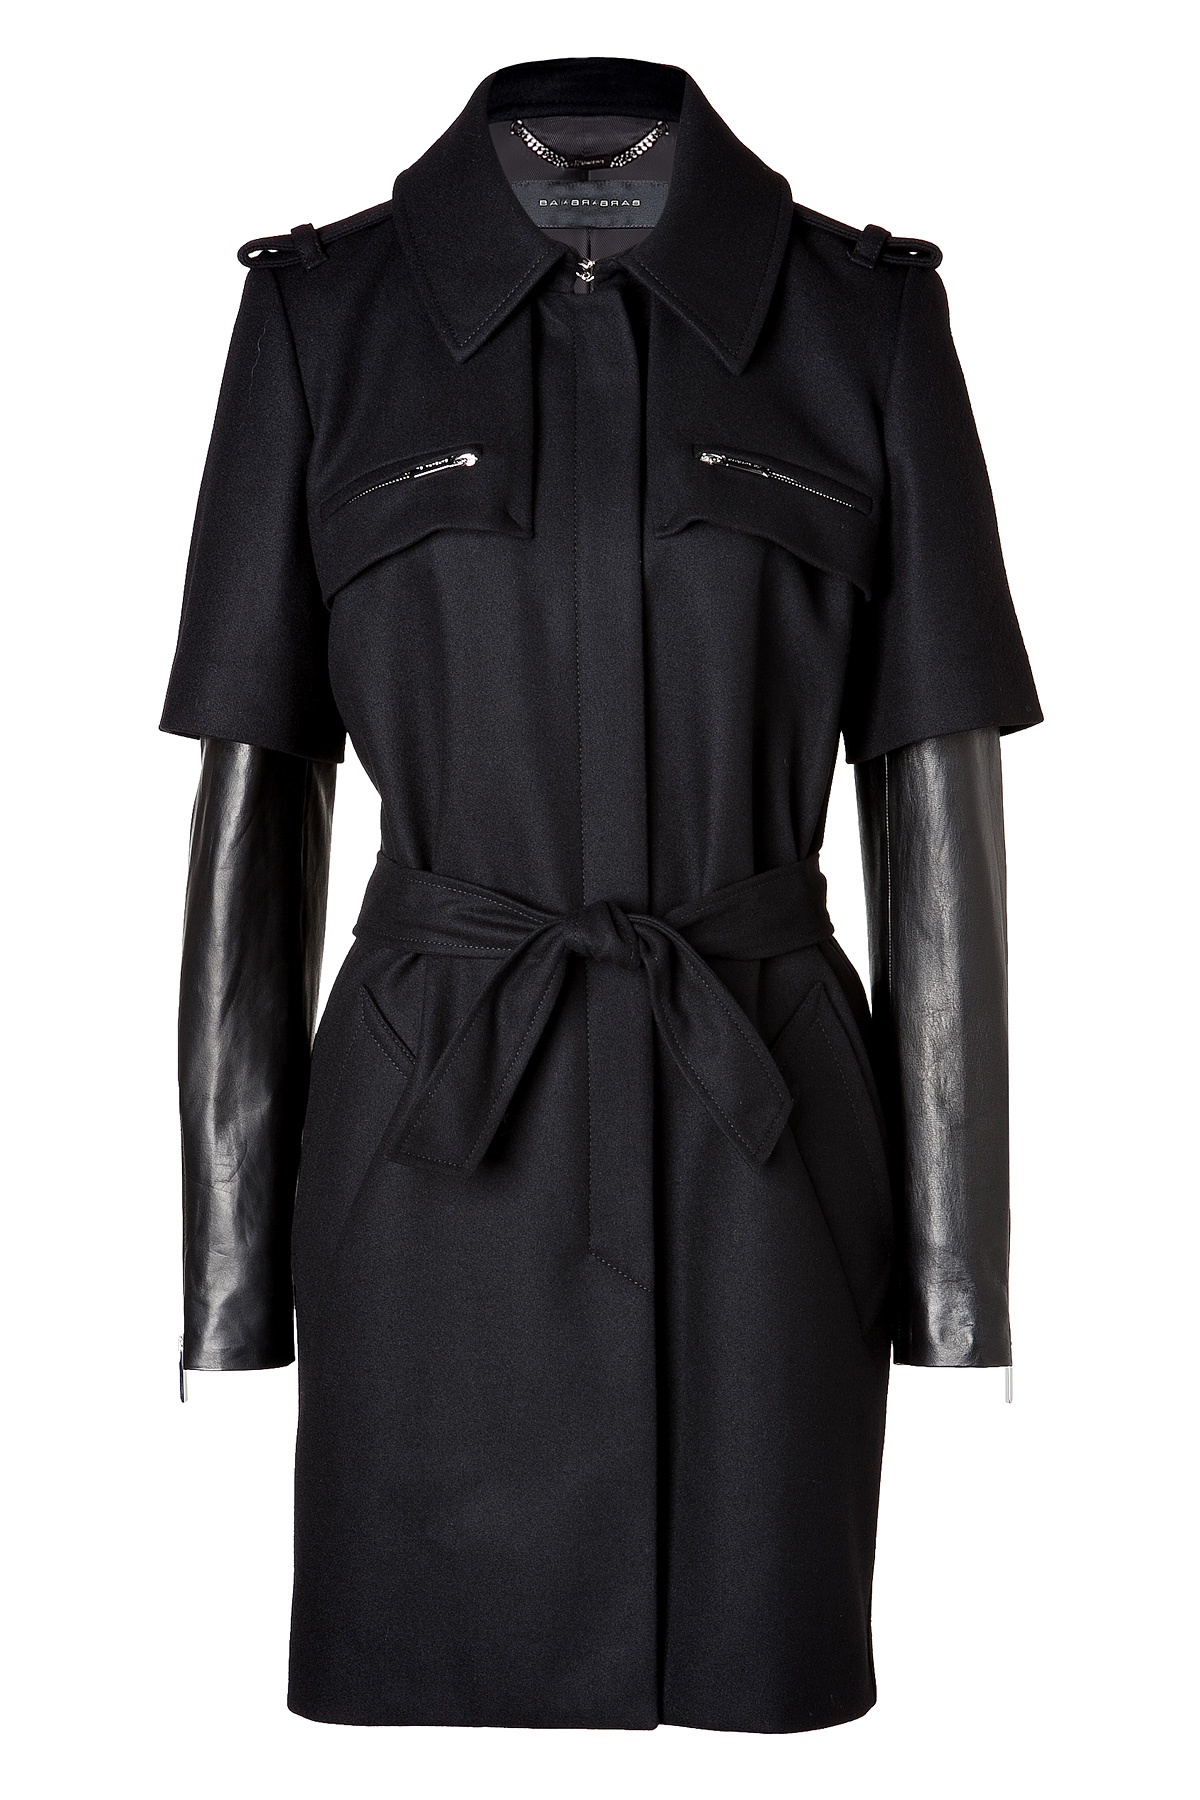 Lyst - Barbara Bui Leather Sleeve Coat in Black in Black